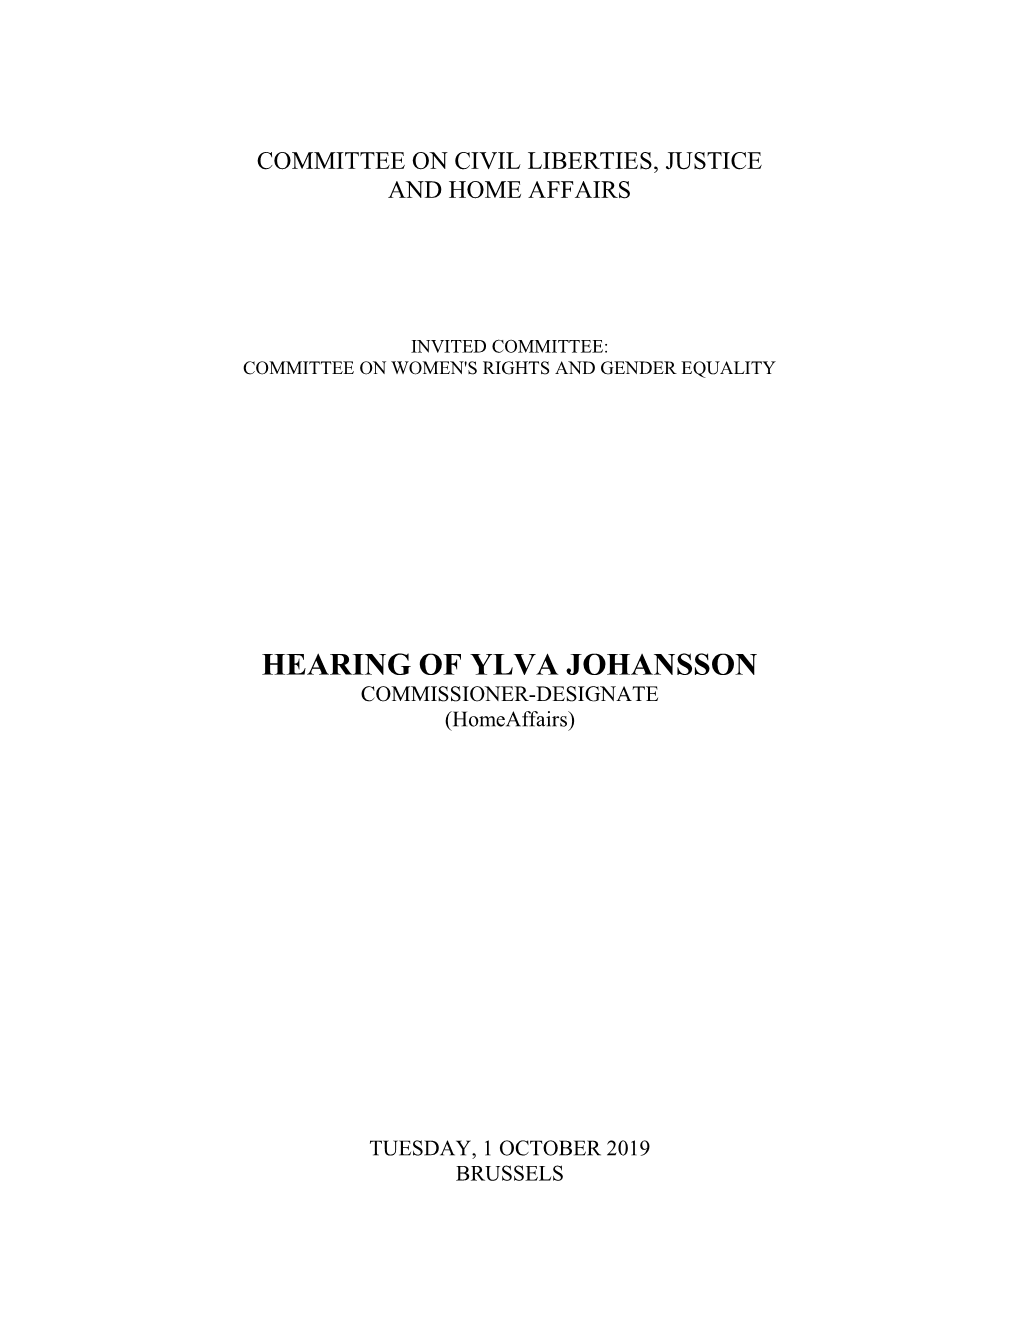 HEARING of YLVA JOHANSSON COMMISSIONER-DESIGNATE (Homeaffairs)